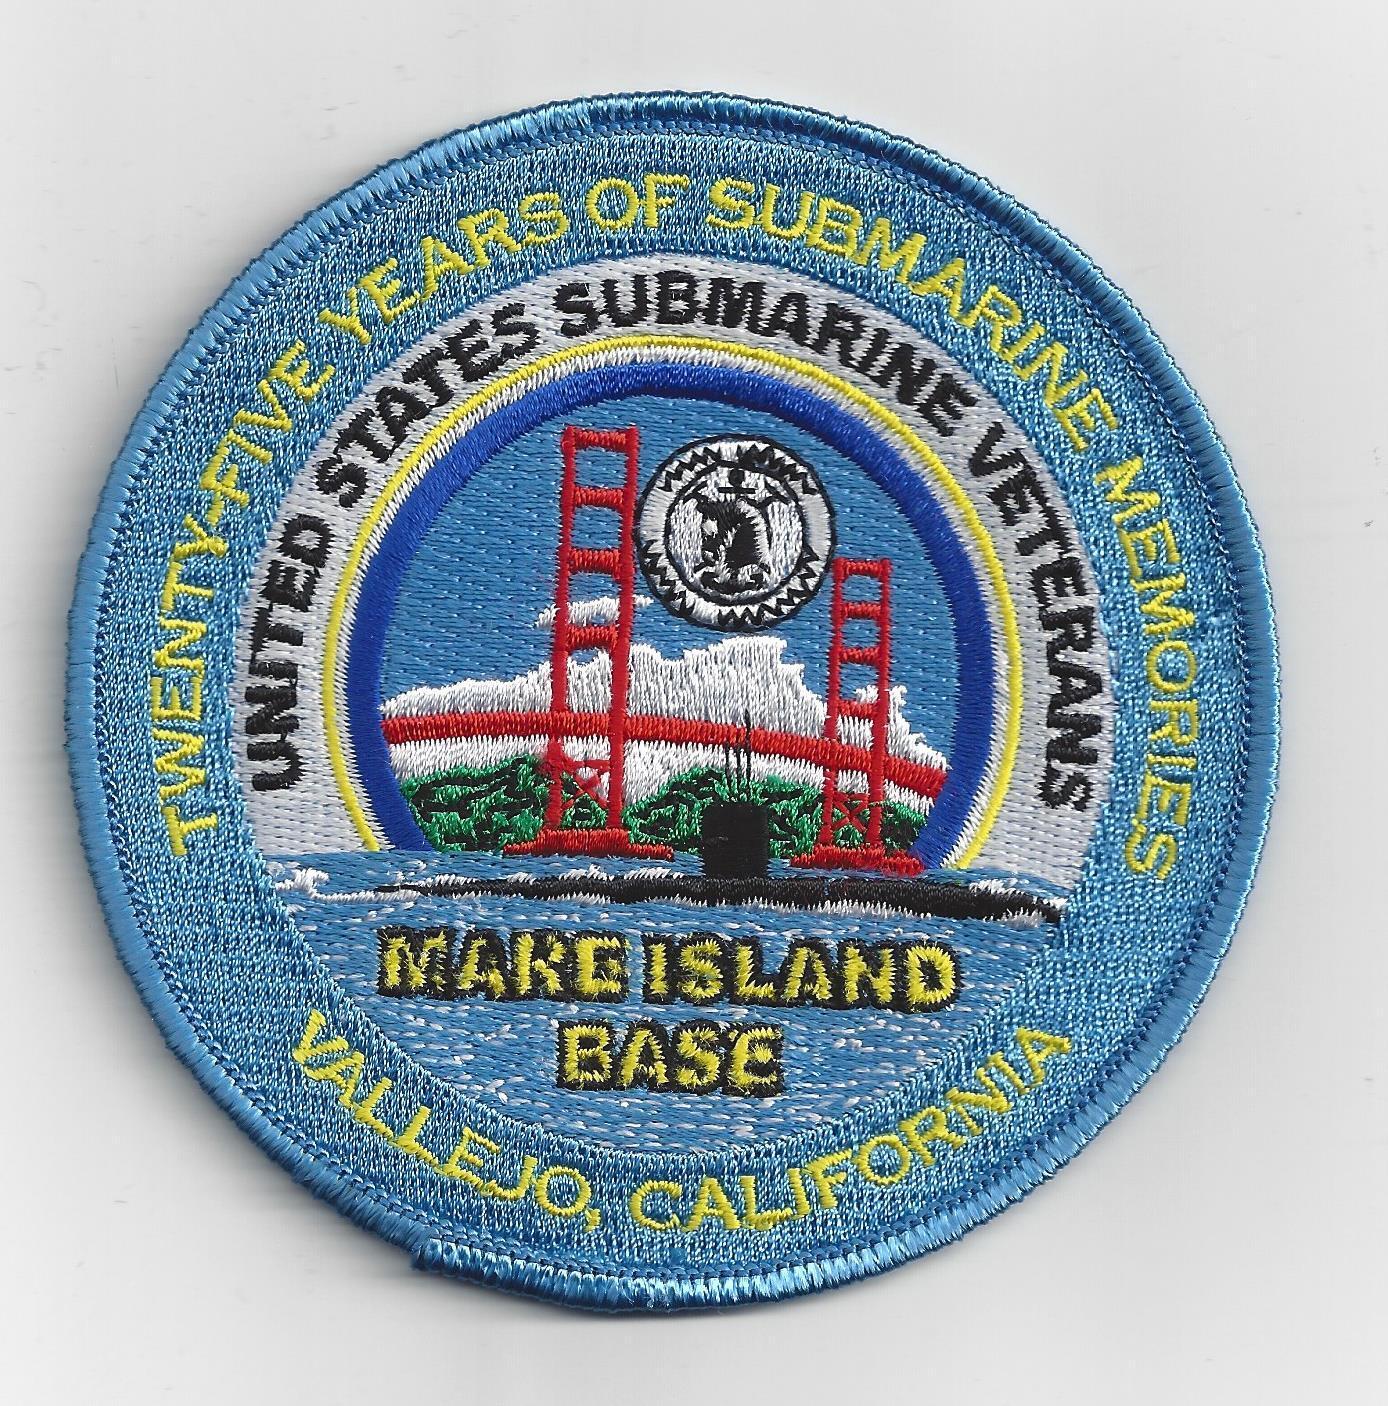 Mare Island 25 Years - USSVI - Submarine - BC Patch - Cat No. C7228